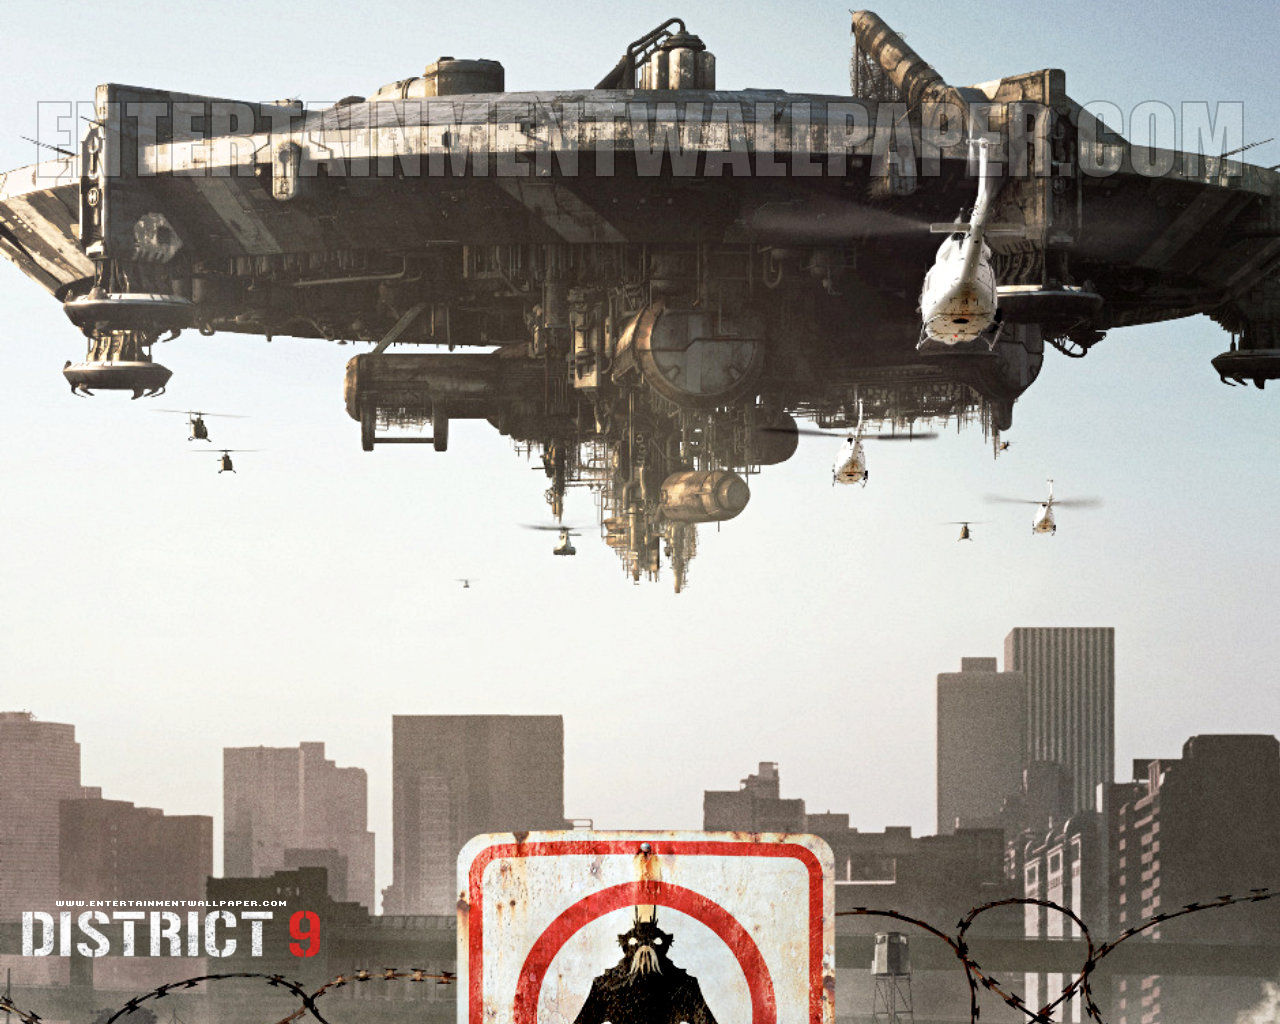 District 9 Wallpaper - Original size, download now.